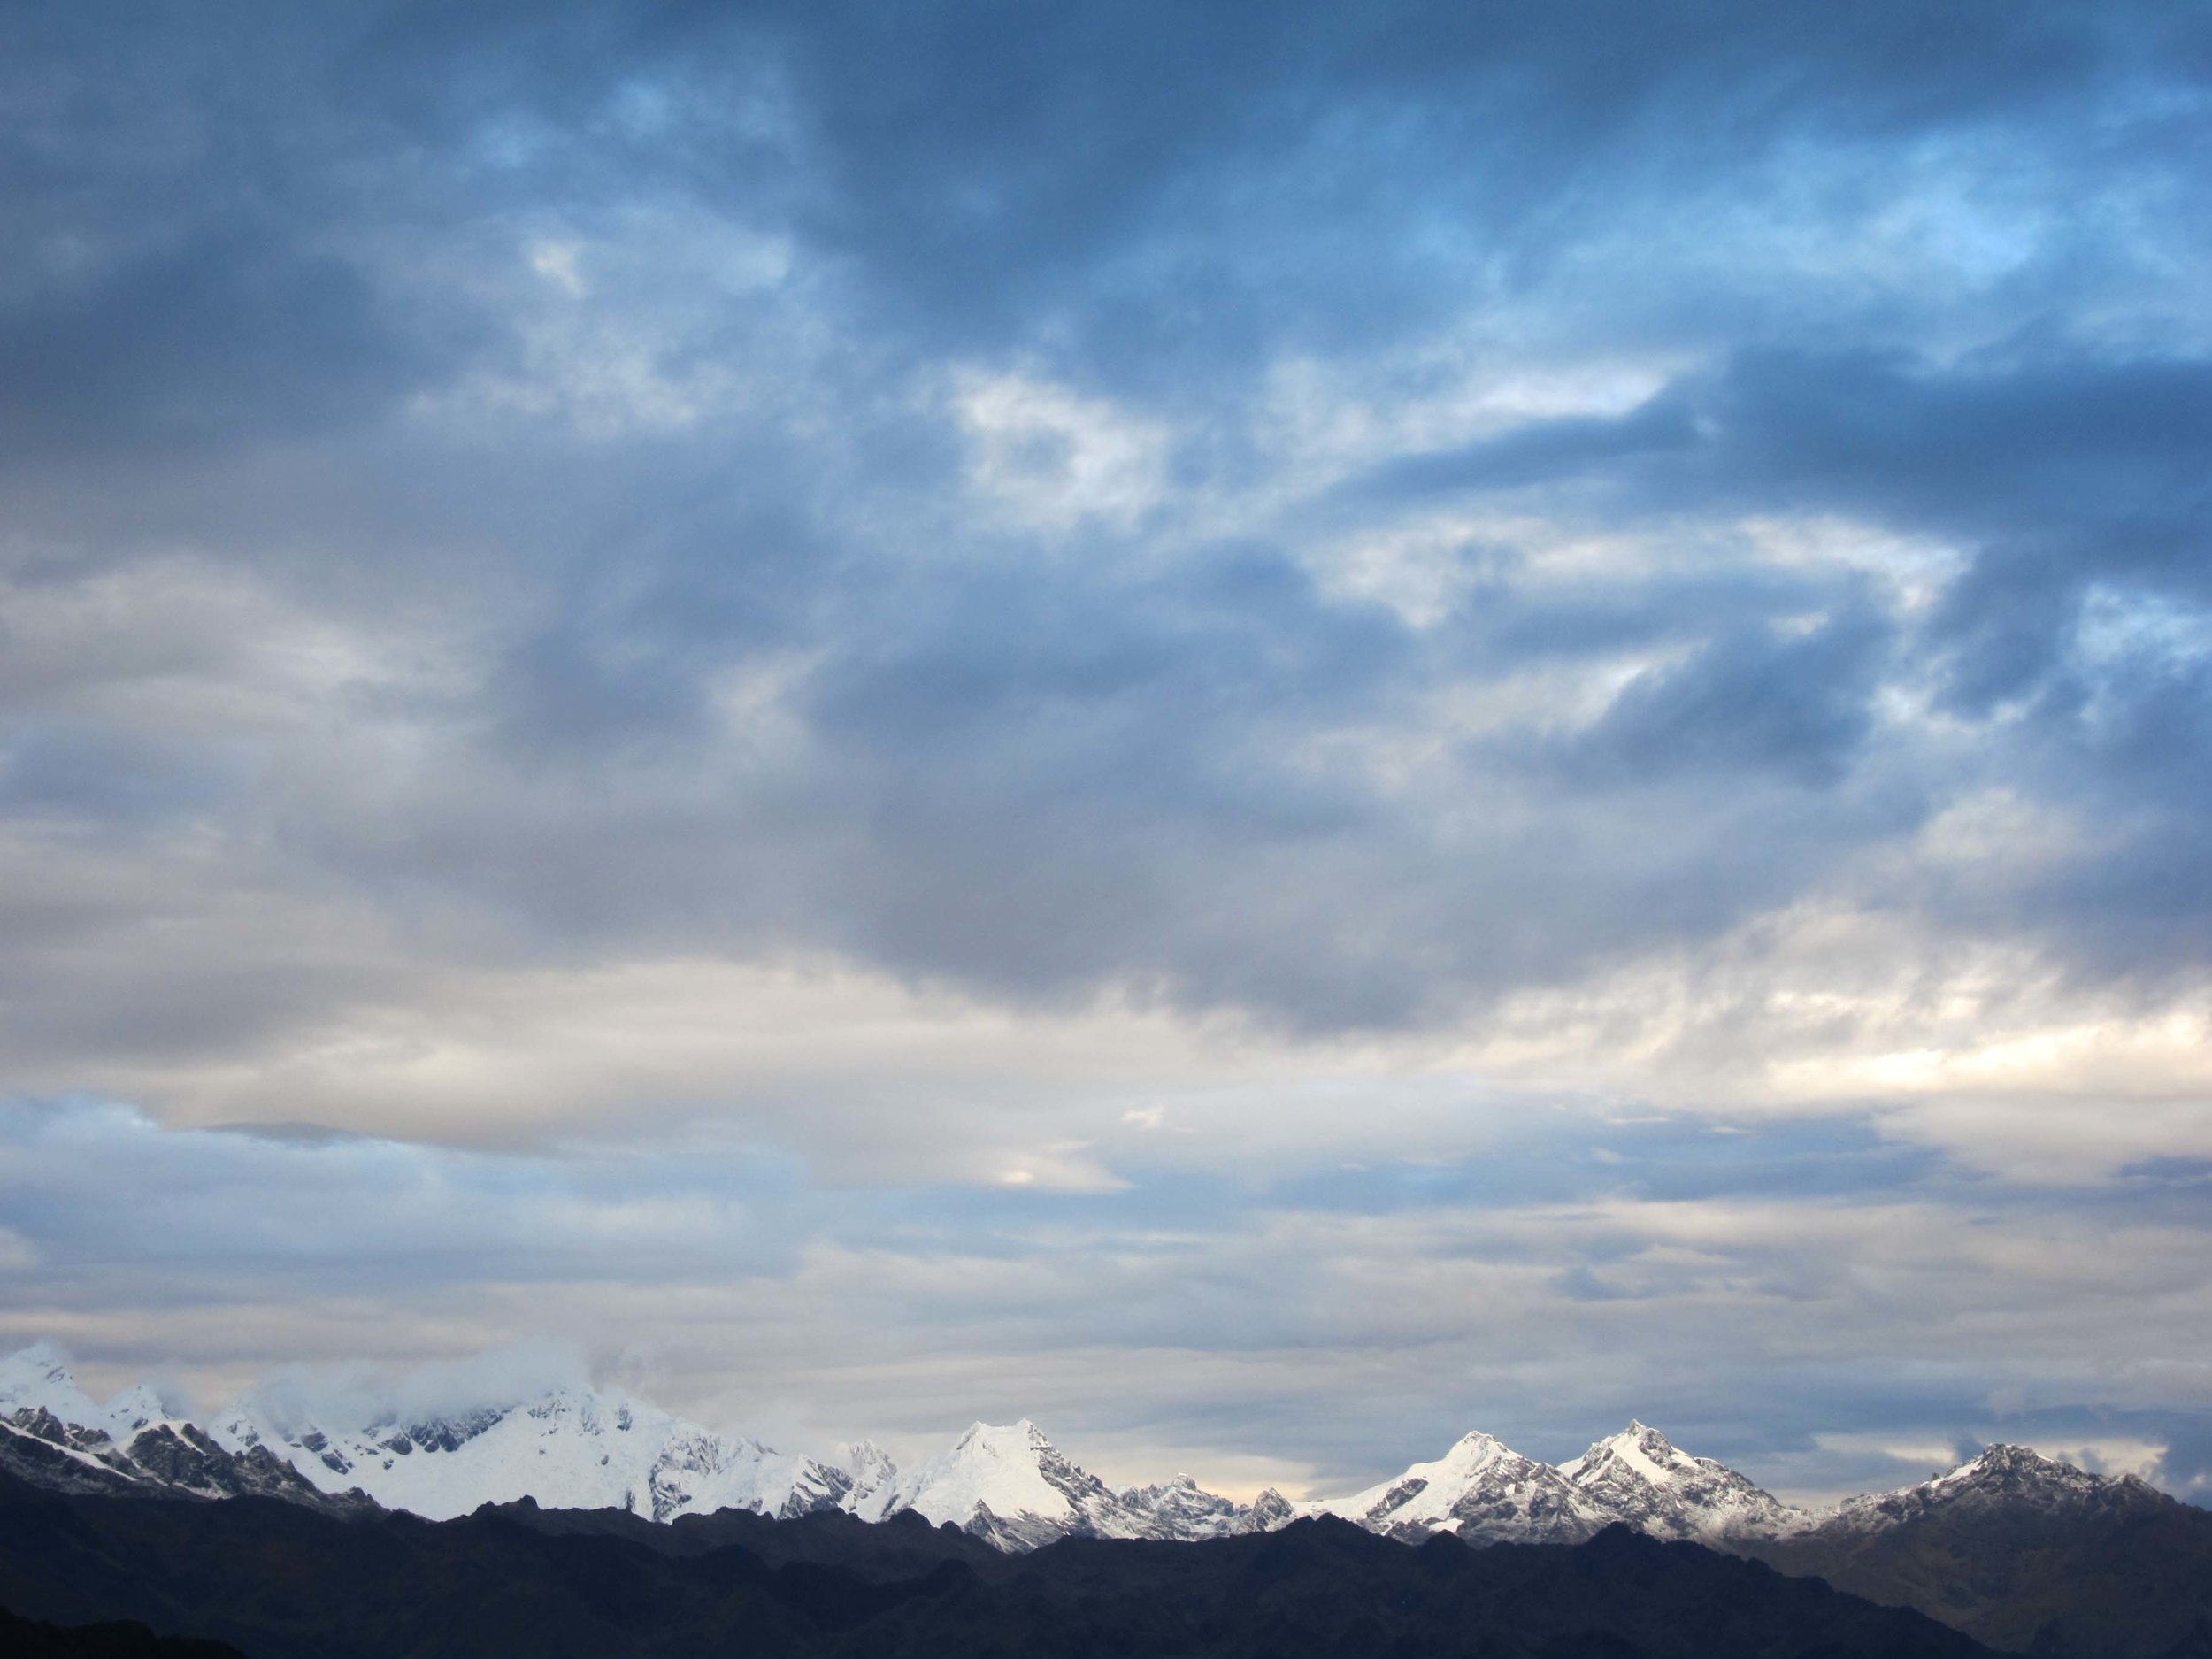    View from Chaquicocha, Inca Trail   